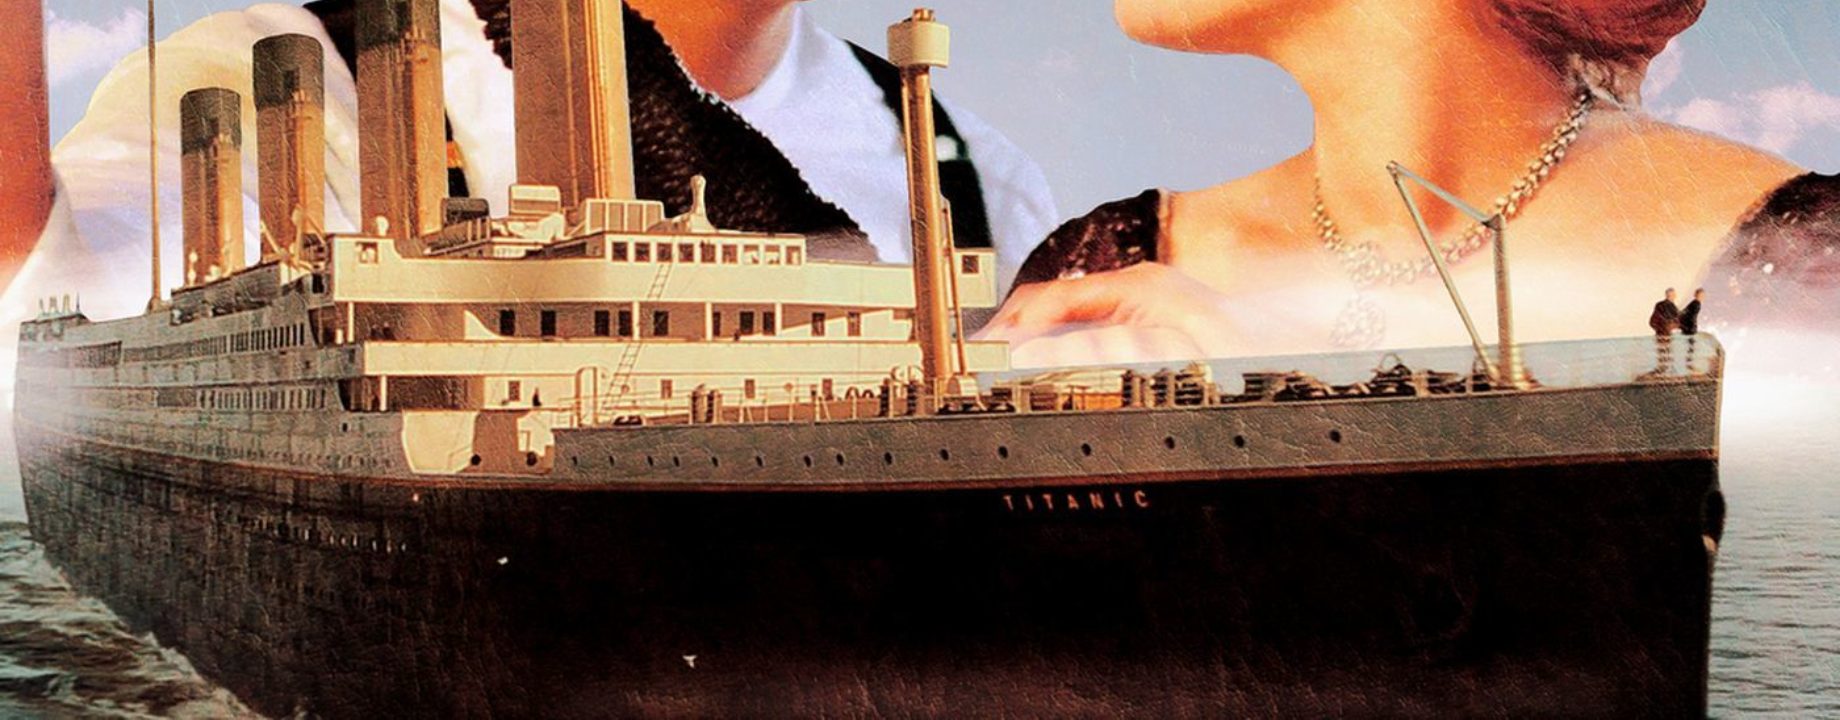 Titanic25th Non Feat Paramount Pictures Ringer